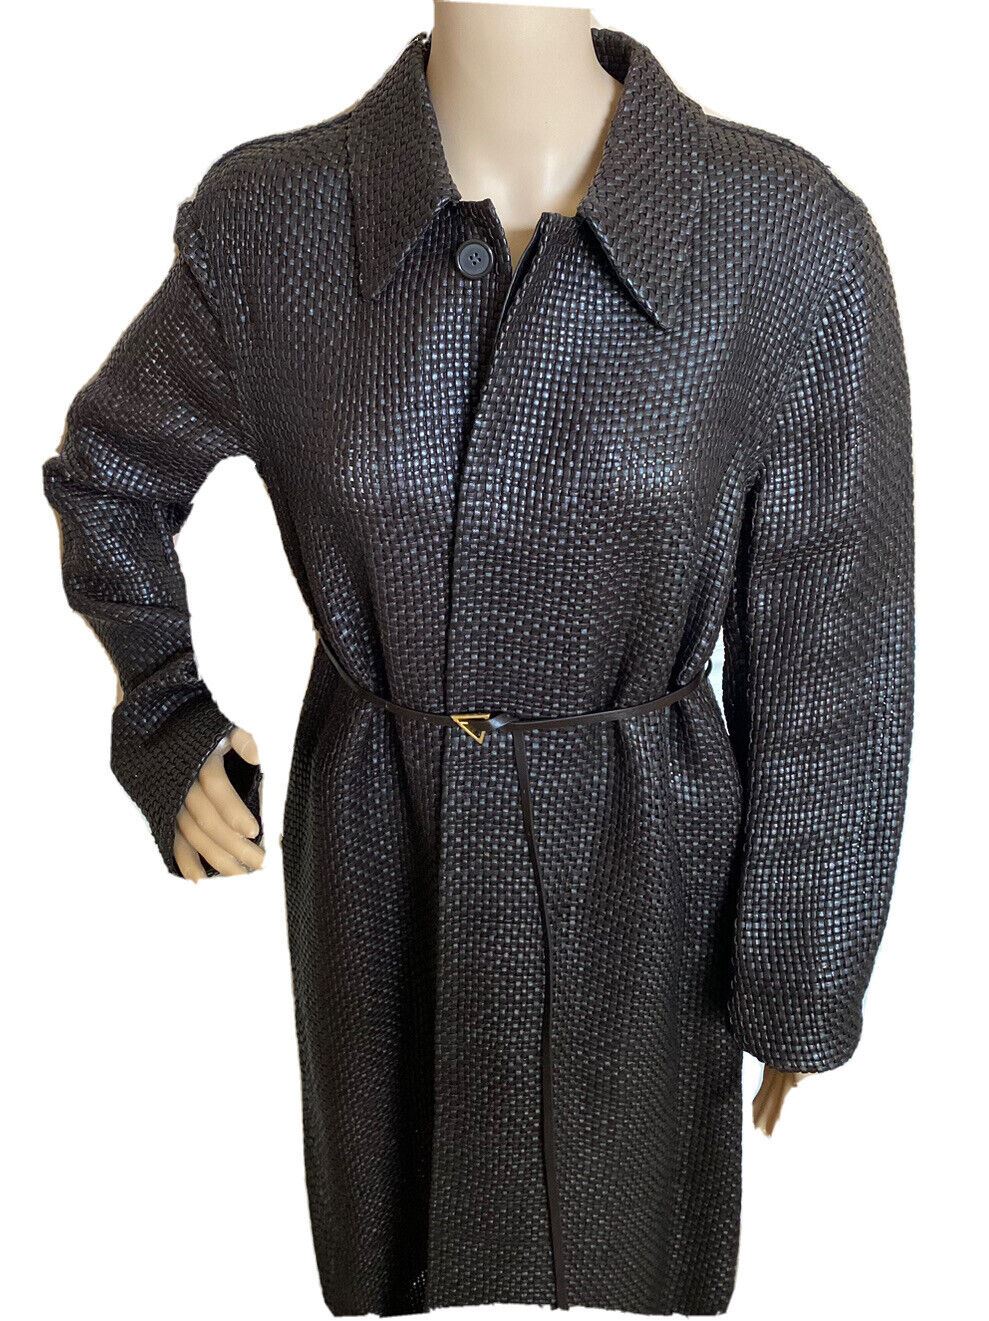 NWT $12200 Bottega Veneta Womens Intrecciato Woven Leather Coat Chocolate 604525